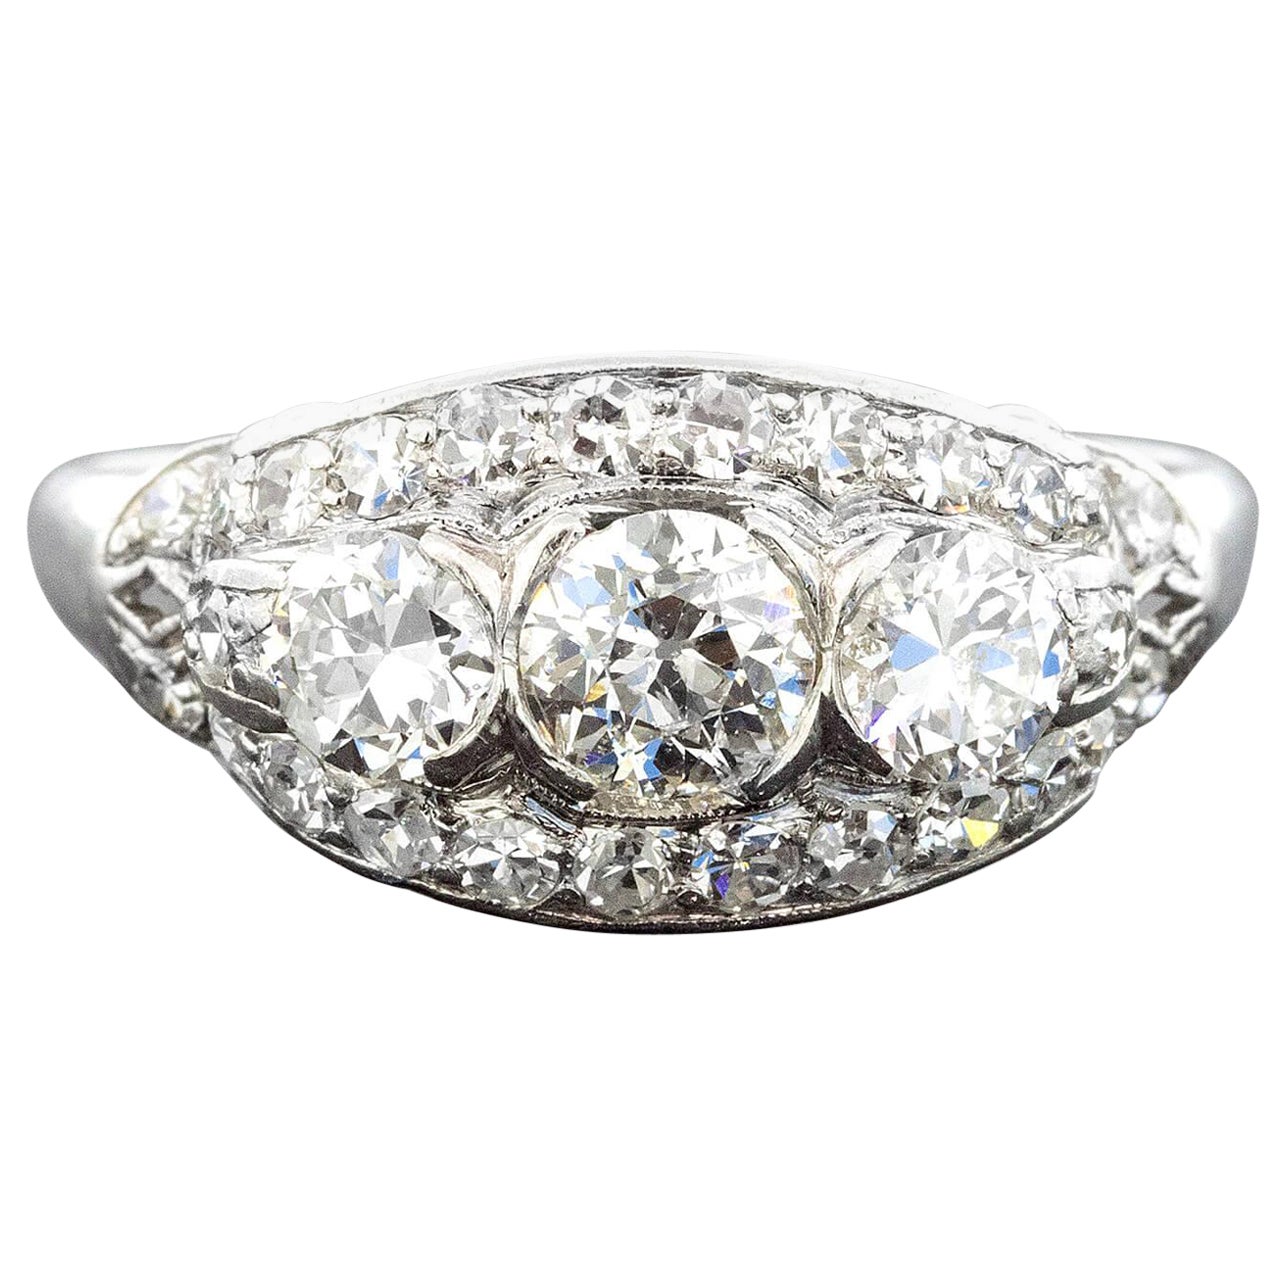 Art Deco Diamond Cluster Ring Circa 1930s